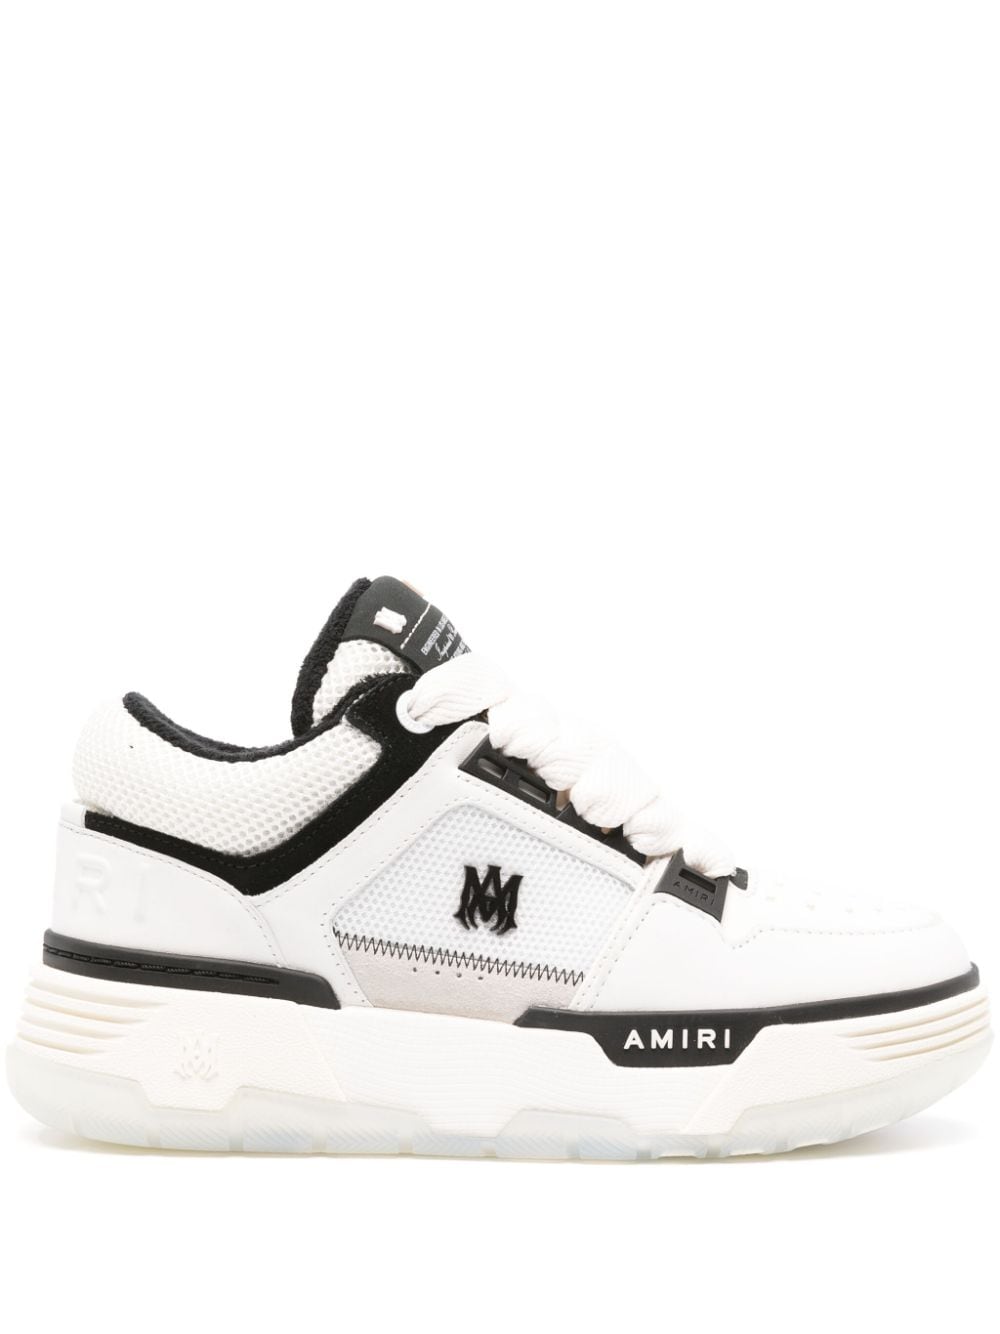 AMIRI MA-1 Leather Sneakers - Farfetch